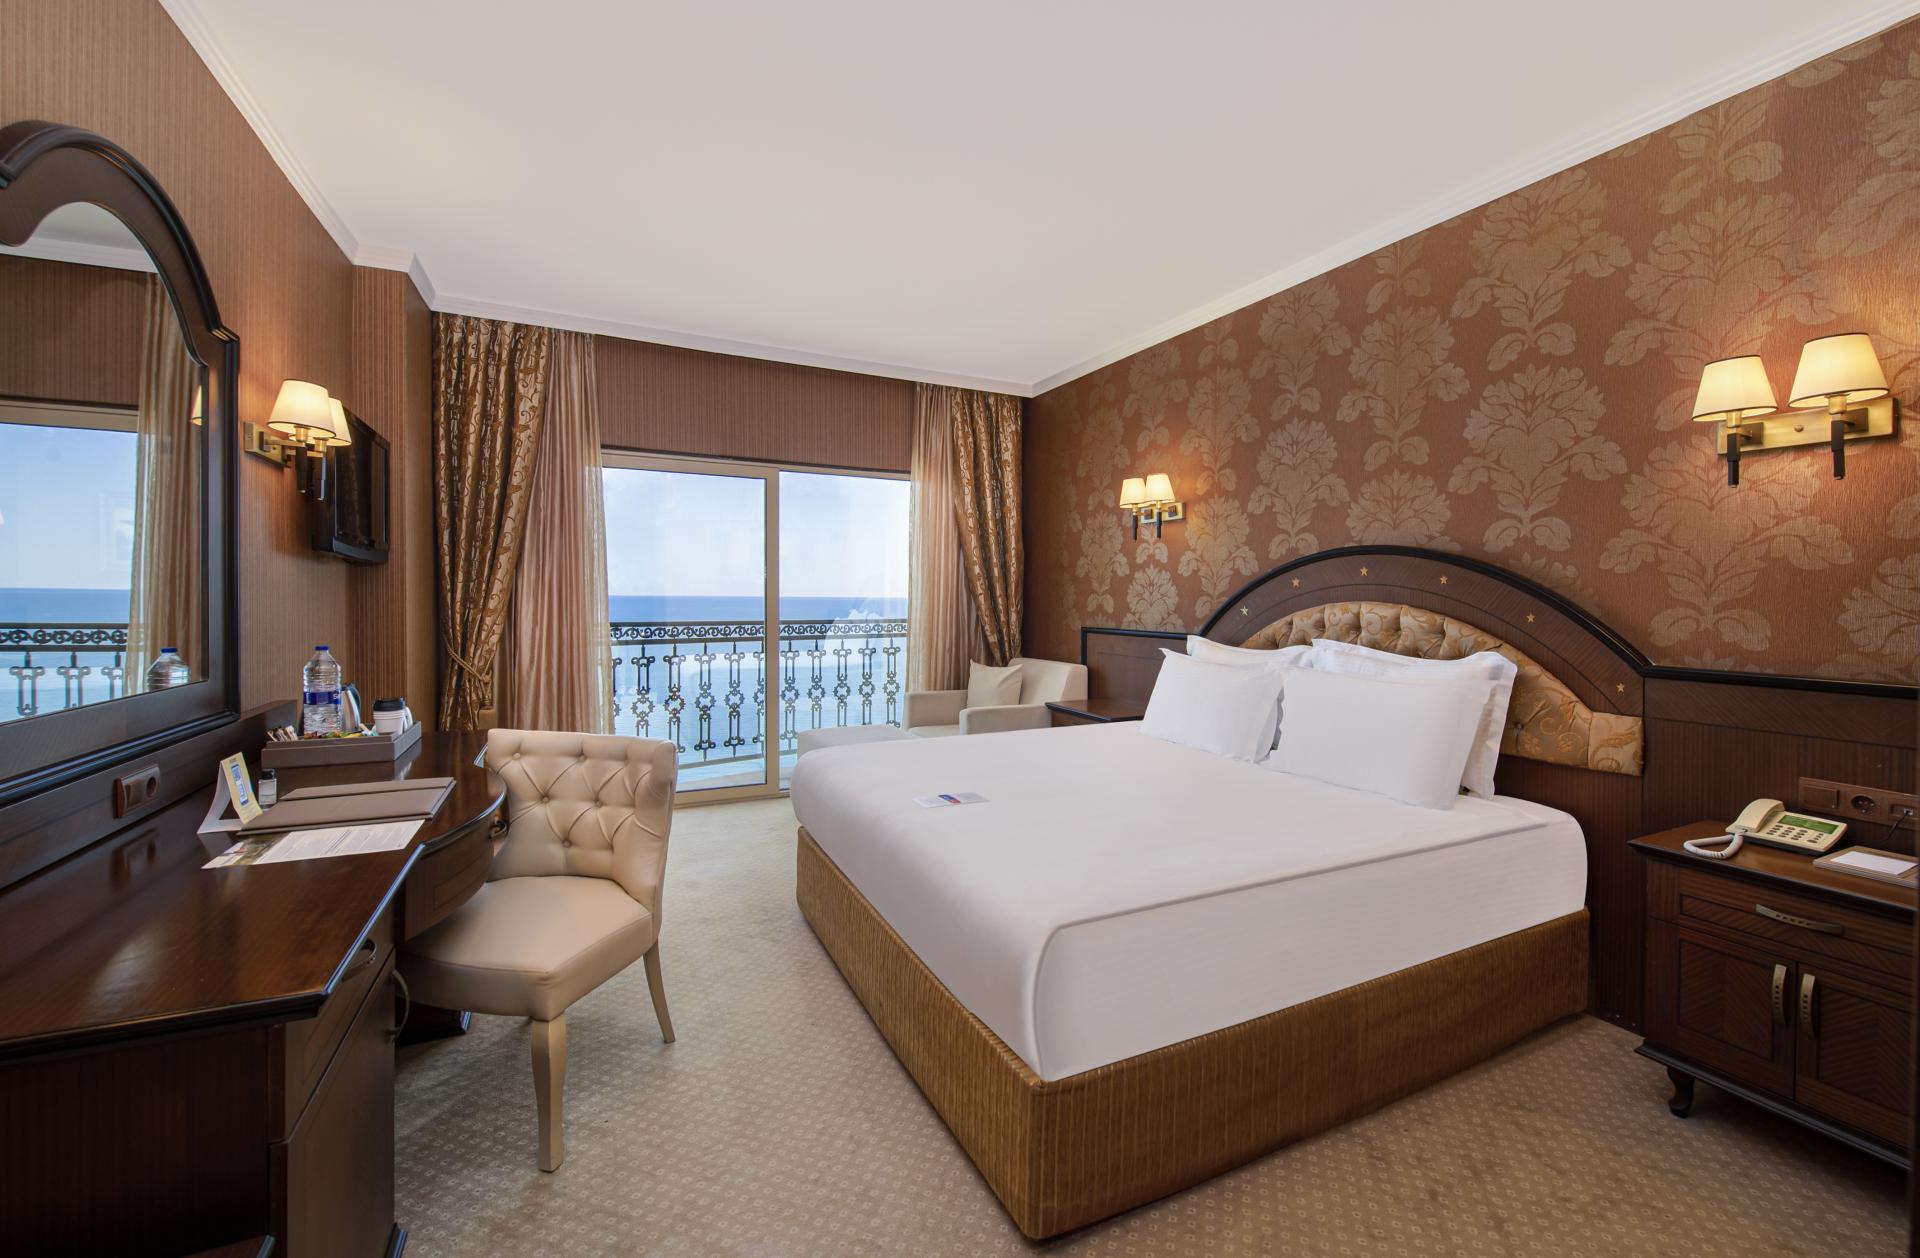 Hotel Megasaray West Beach Antalya - Turcja